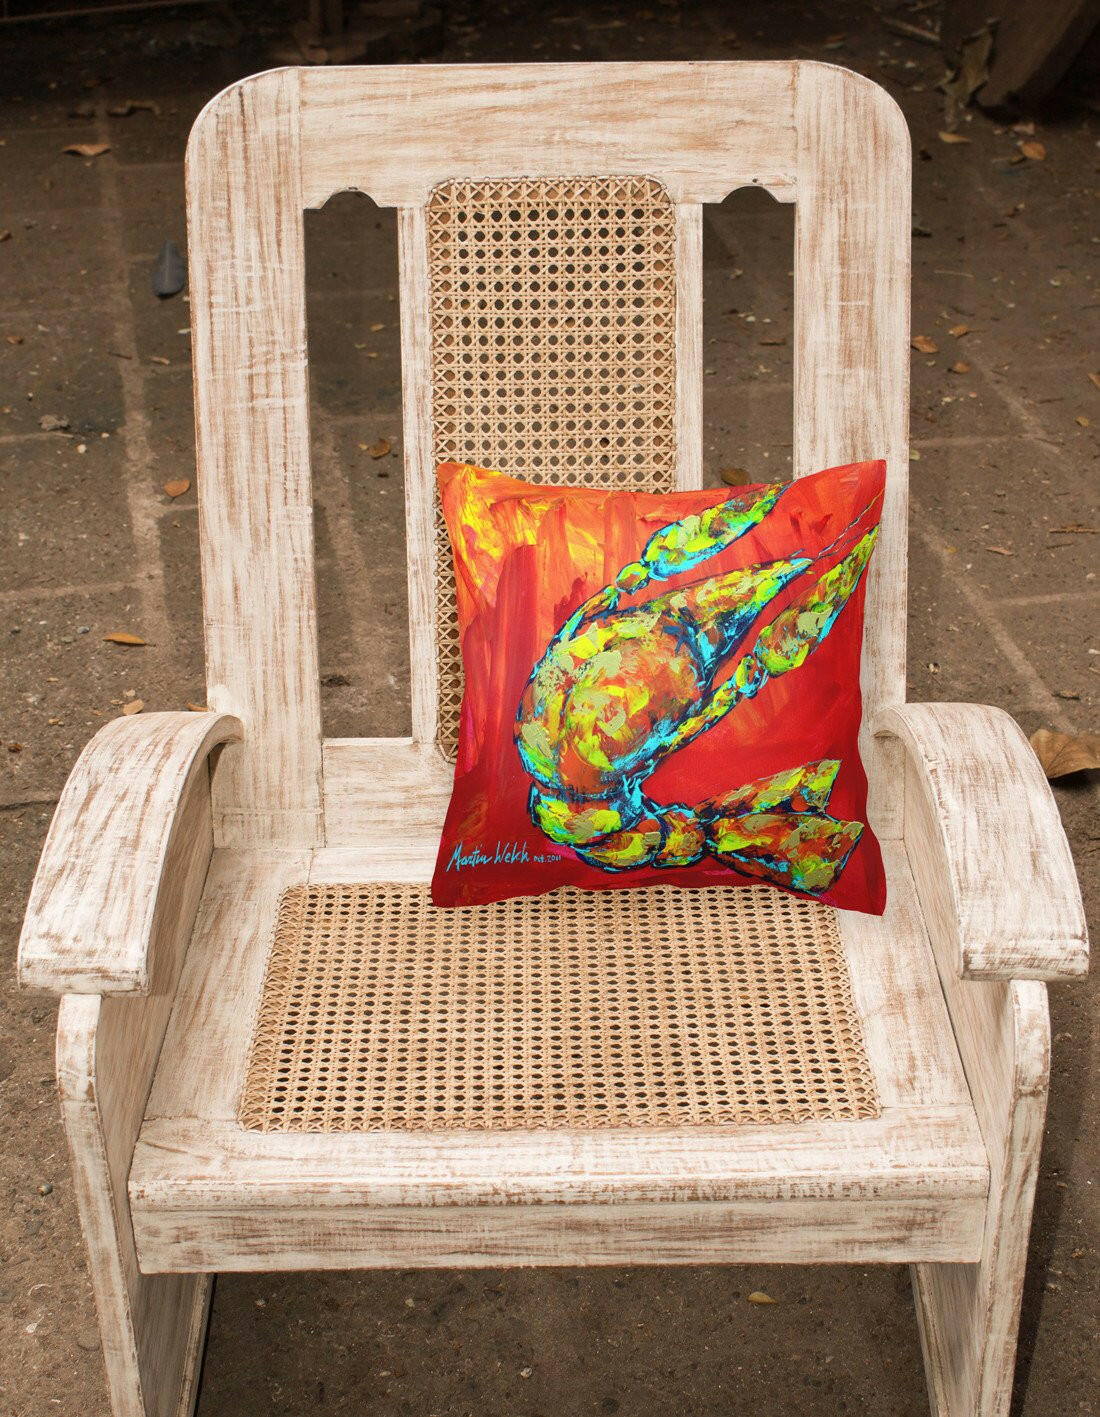 Crawfish Hot Craw Canvas Fabric Decorative Pillow MW1134PW1414 by Caroline's Treasures